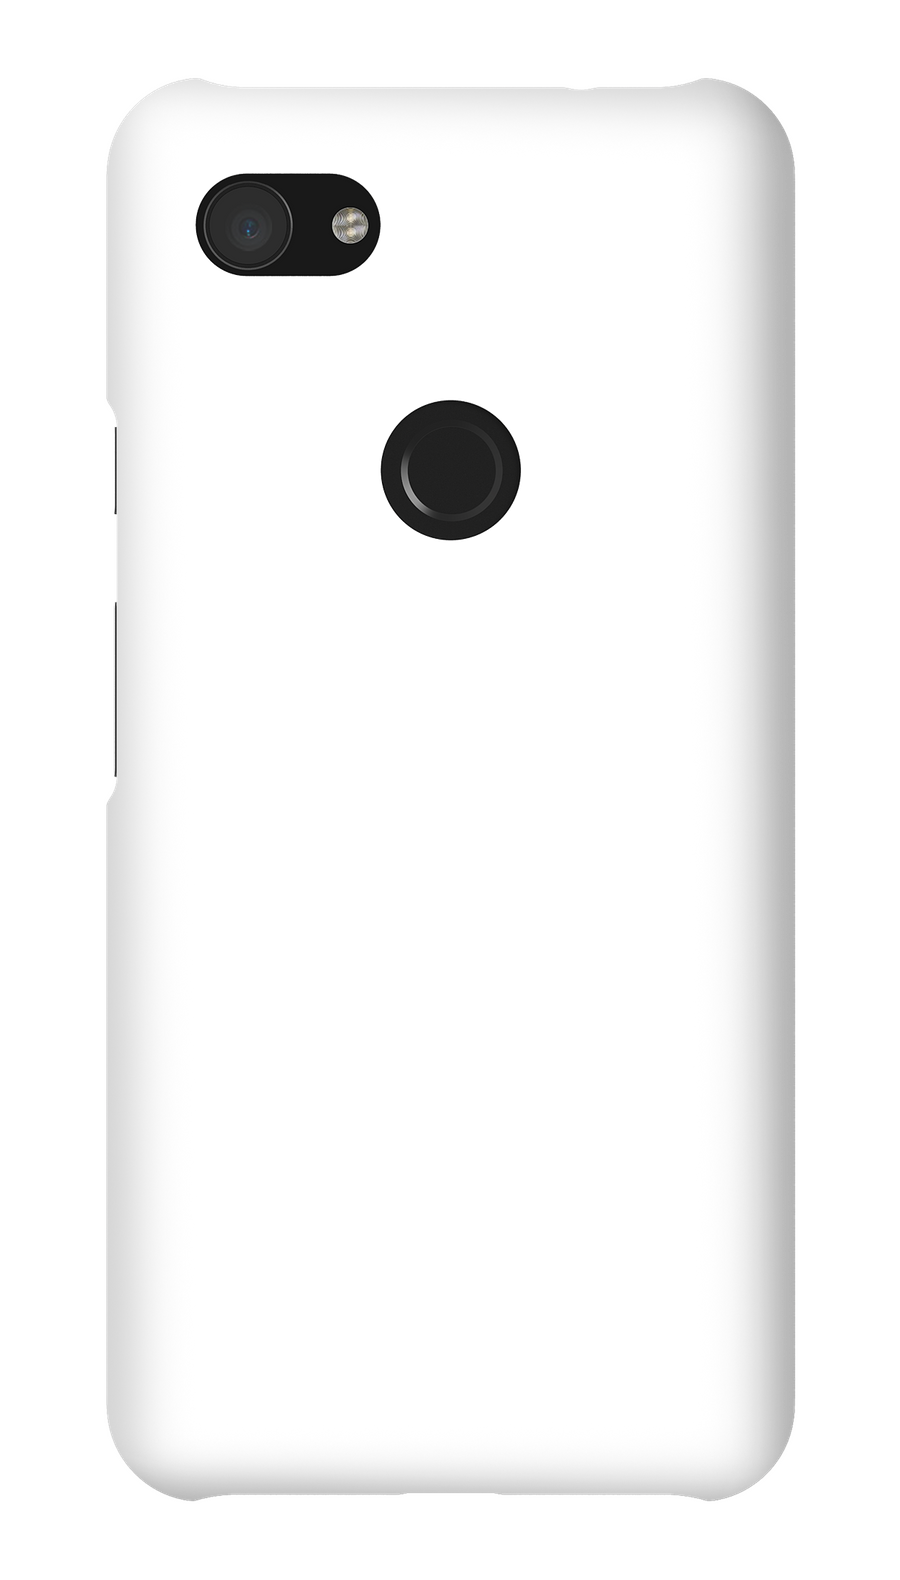 Pixel 3A XL Cases